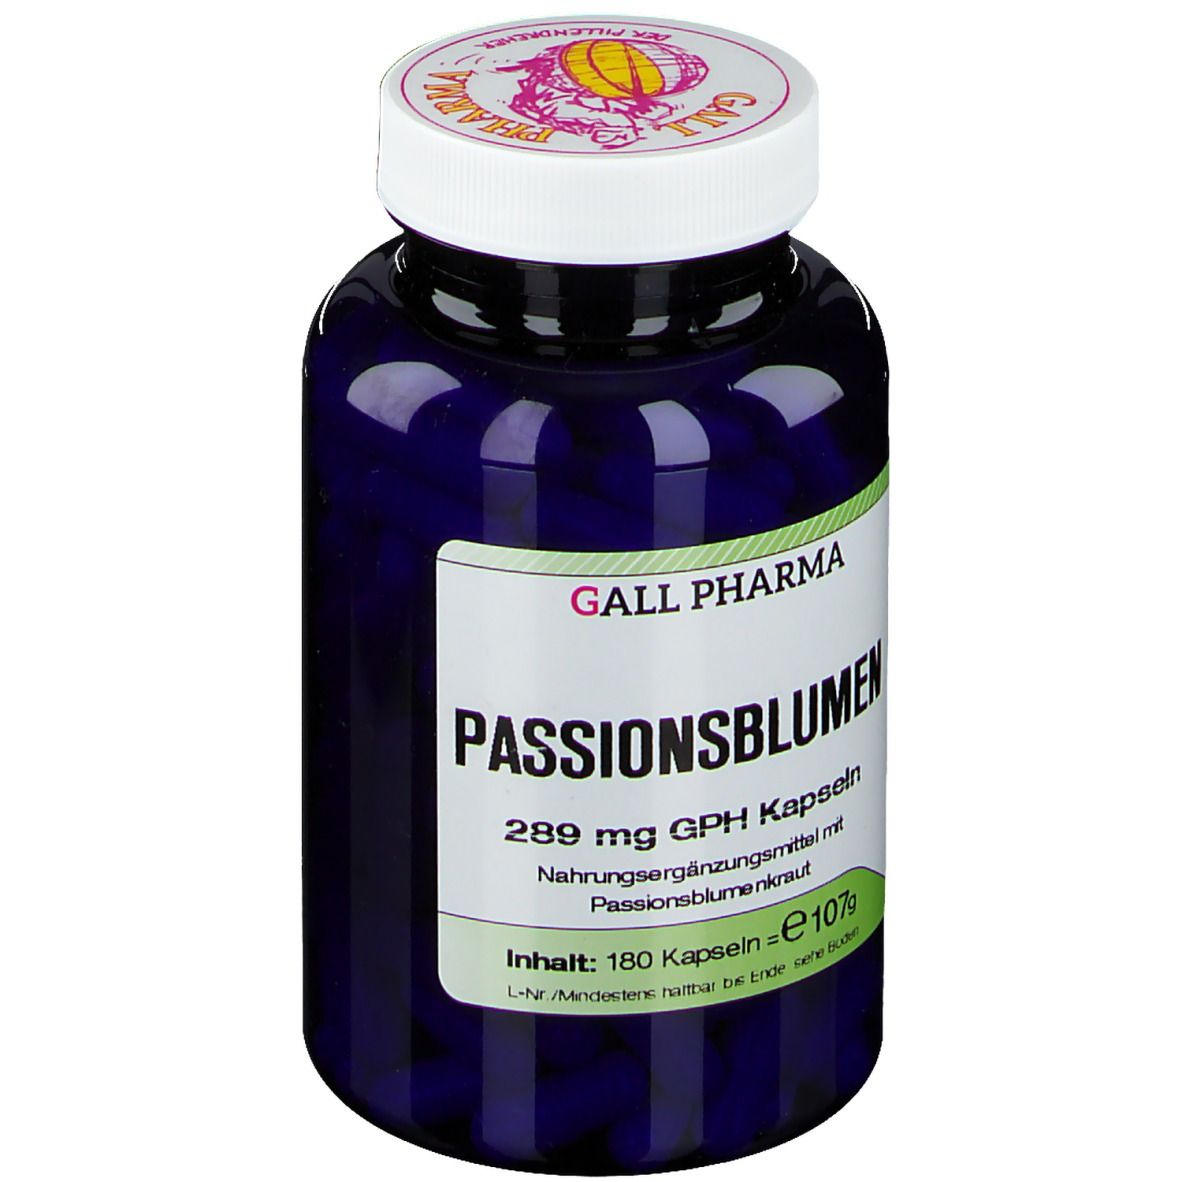 GALL PHARMA Passionsblumen 289 mg GPH Kapseln